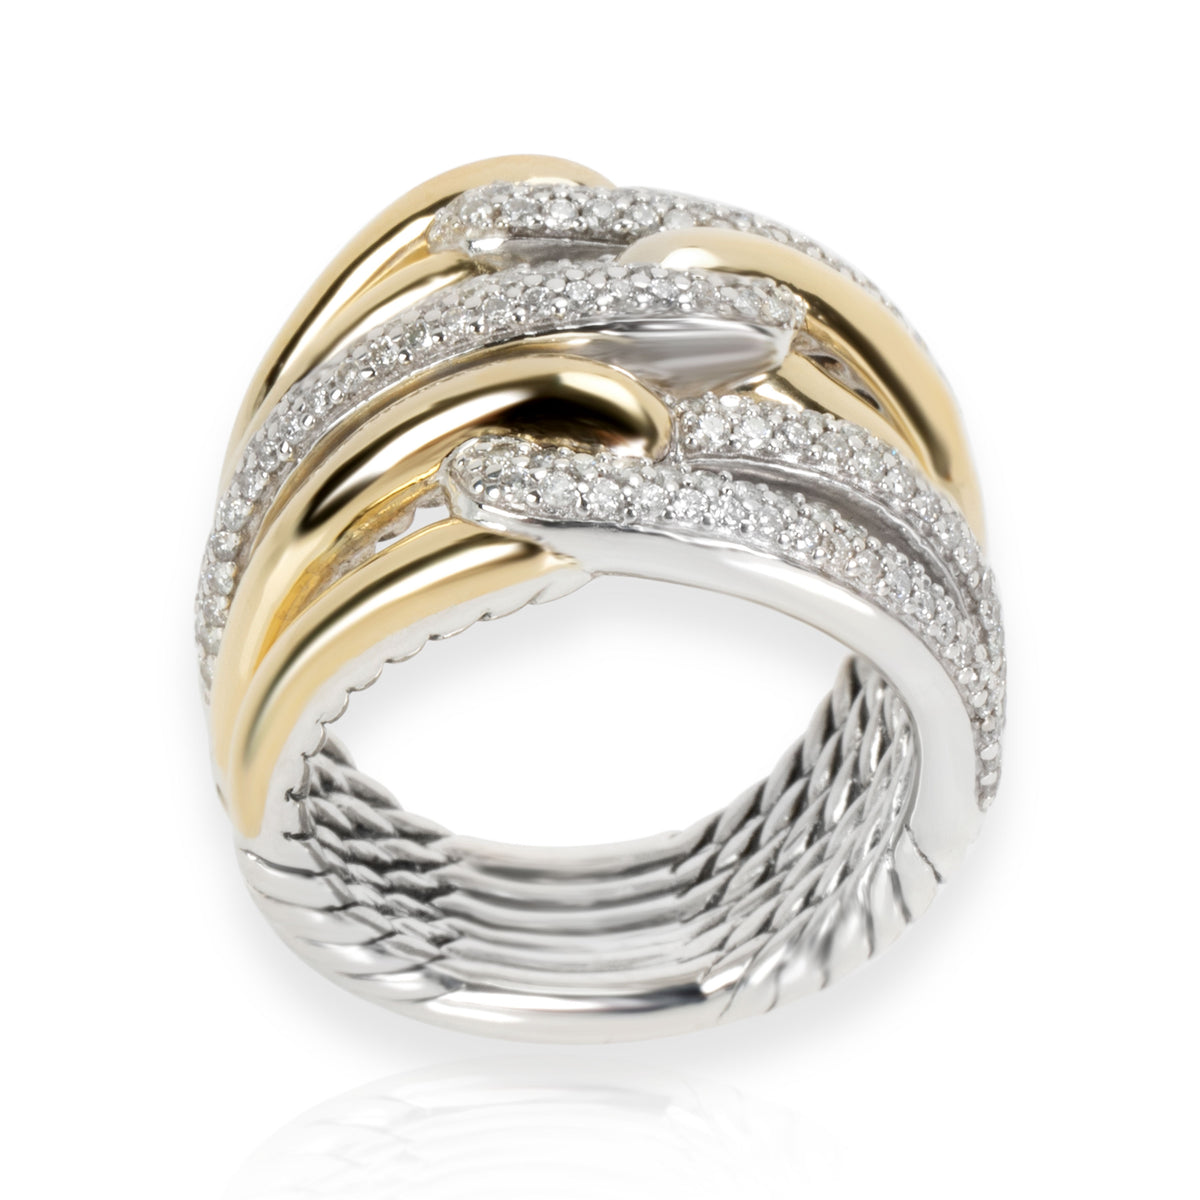 David Yurman Labyrinth Diamond Ring in  Sterling Silver & 18KT Gold 1.07 CTW